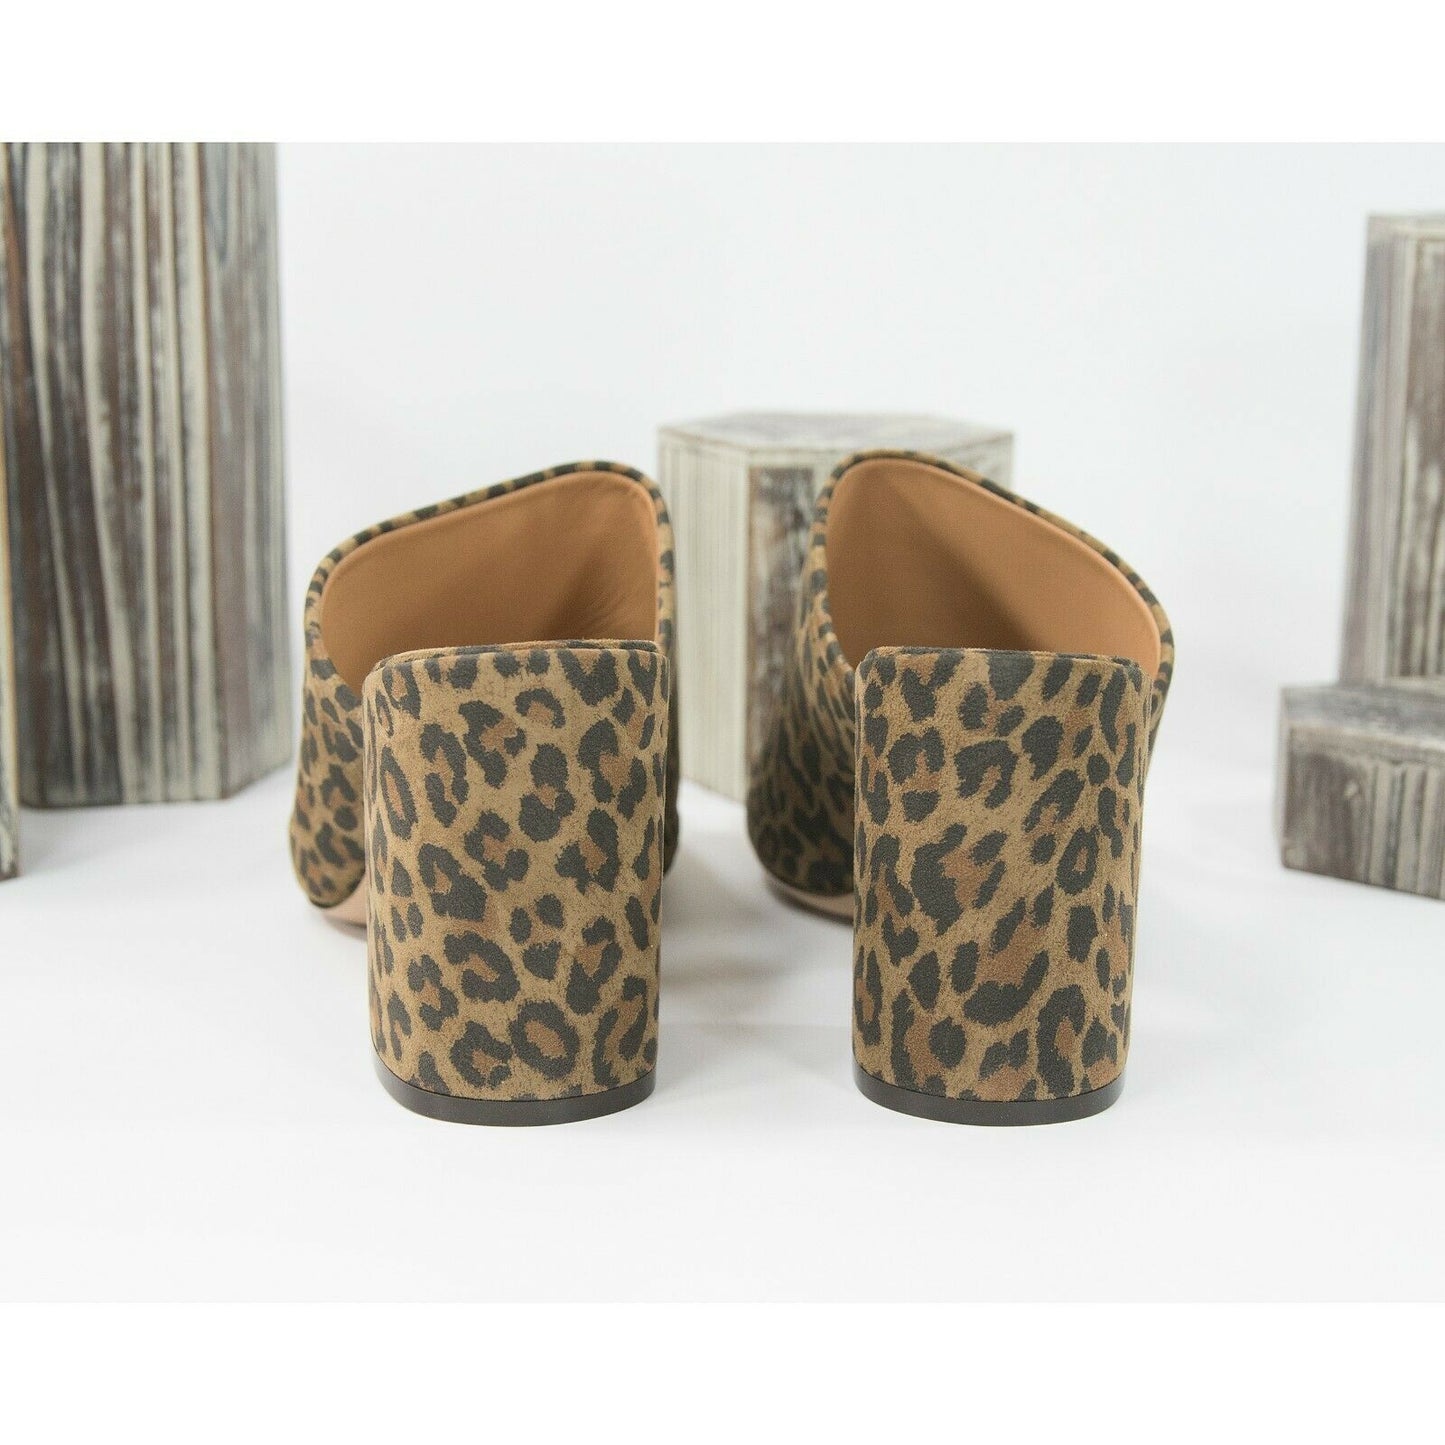 Dries Van Noten Leopard Suede Leather Heels Mules Size 39.5 NIB